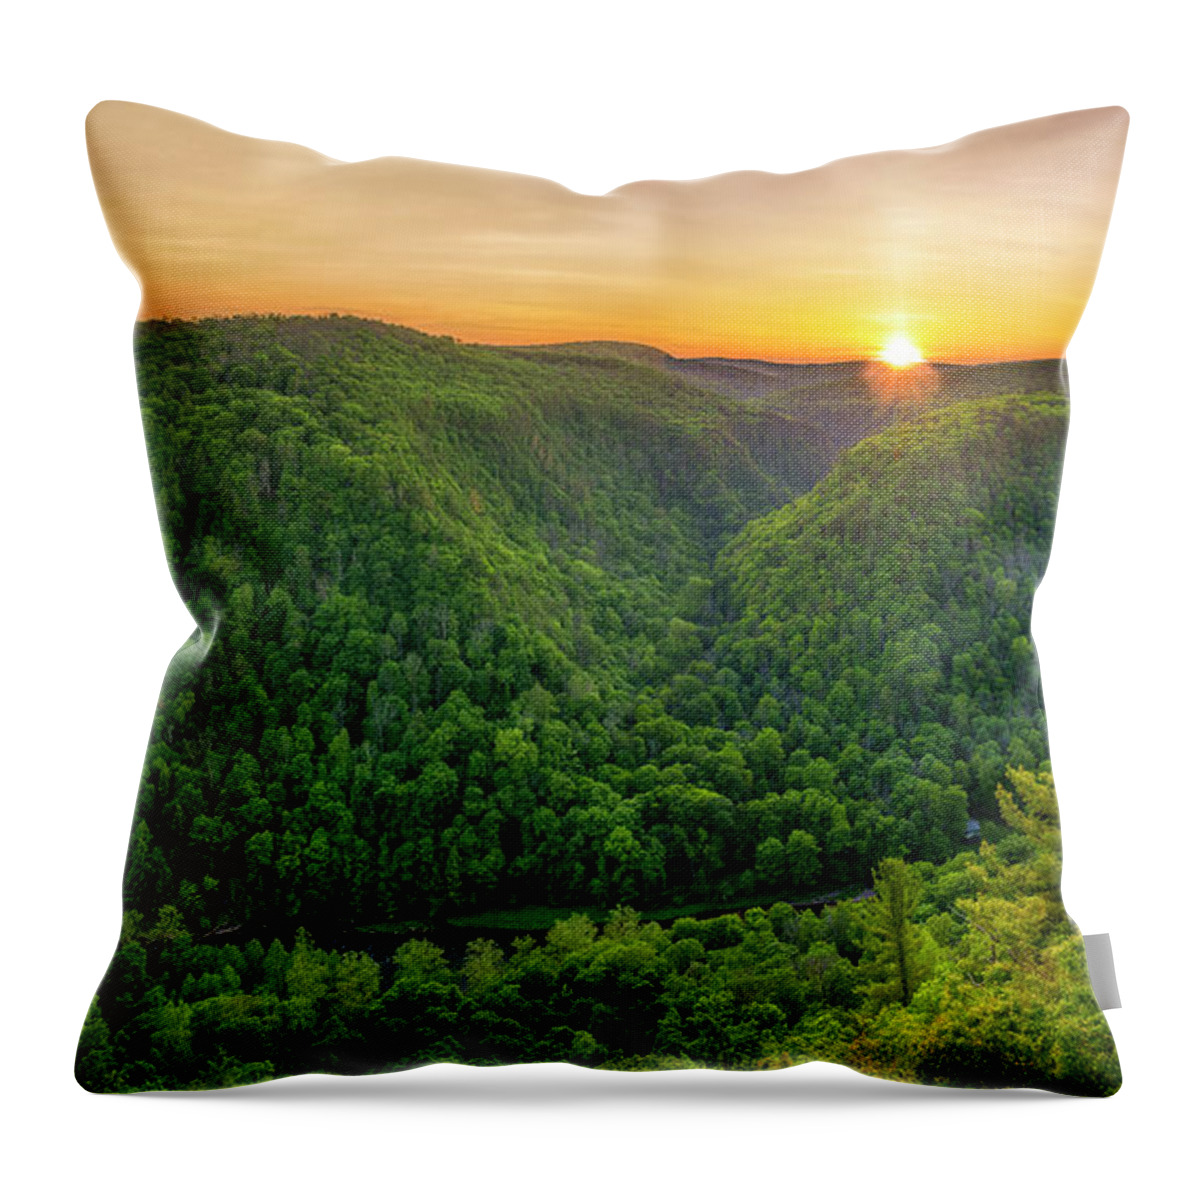 Pennsylvania Grand Canyon Throw Pillow featuring the photograph Pennsylvania Grand Canyon Sunset by Mark Papke